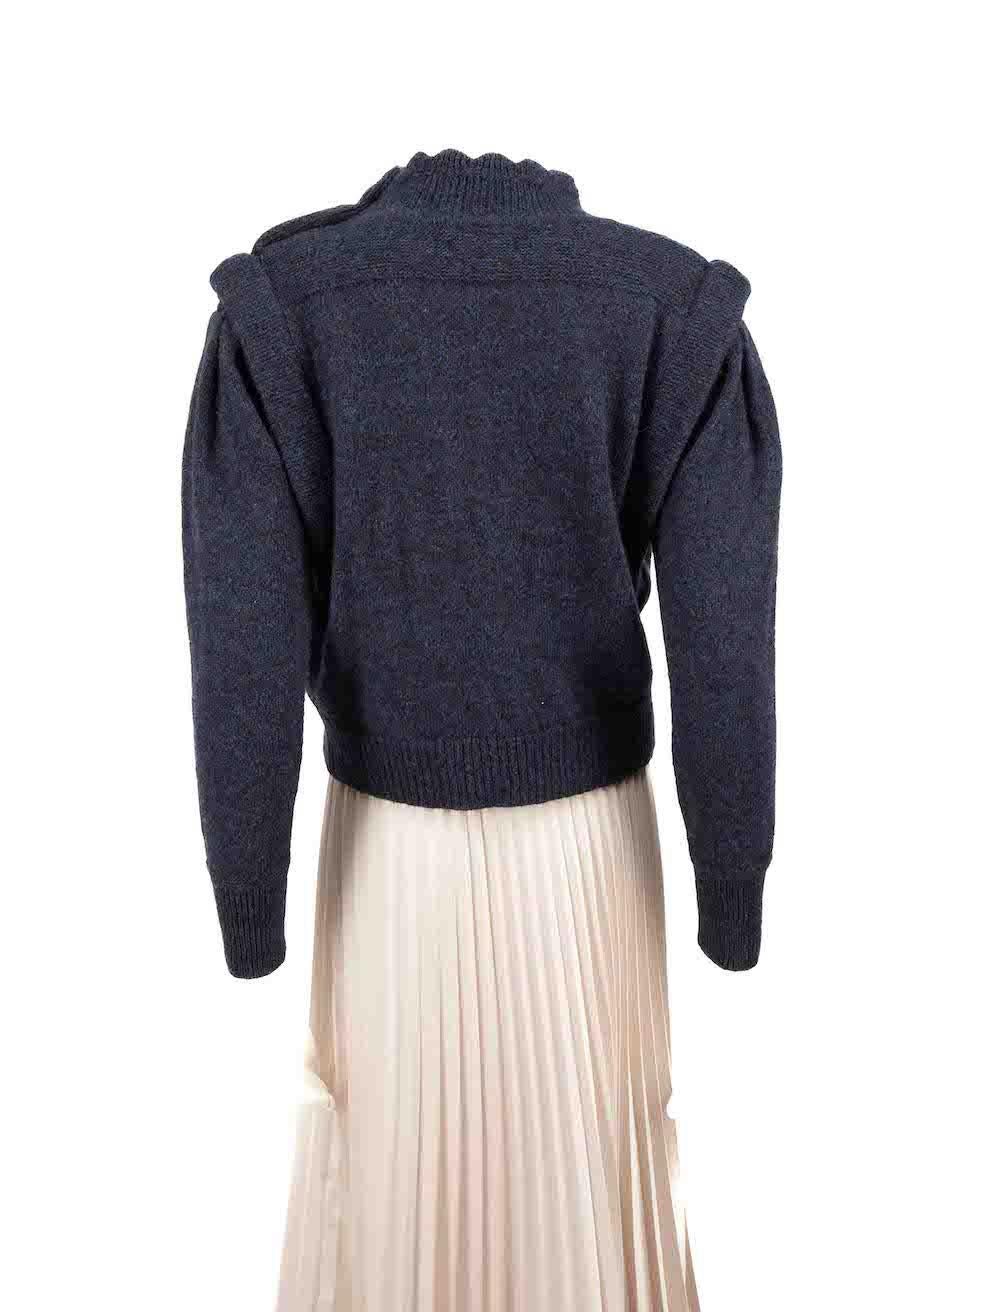 Isabel Marant Navy Wool Shoulder Panel Jumper Size S Excellent état - En vente à London, GB